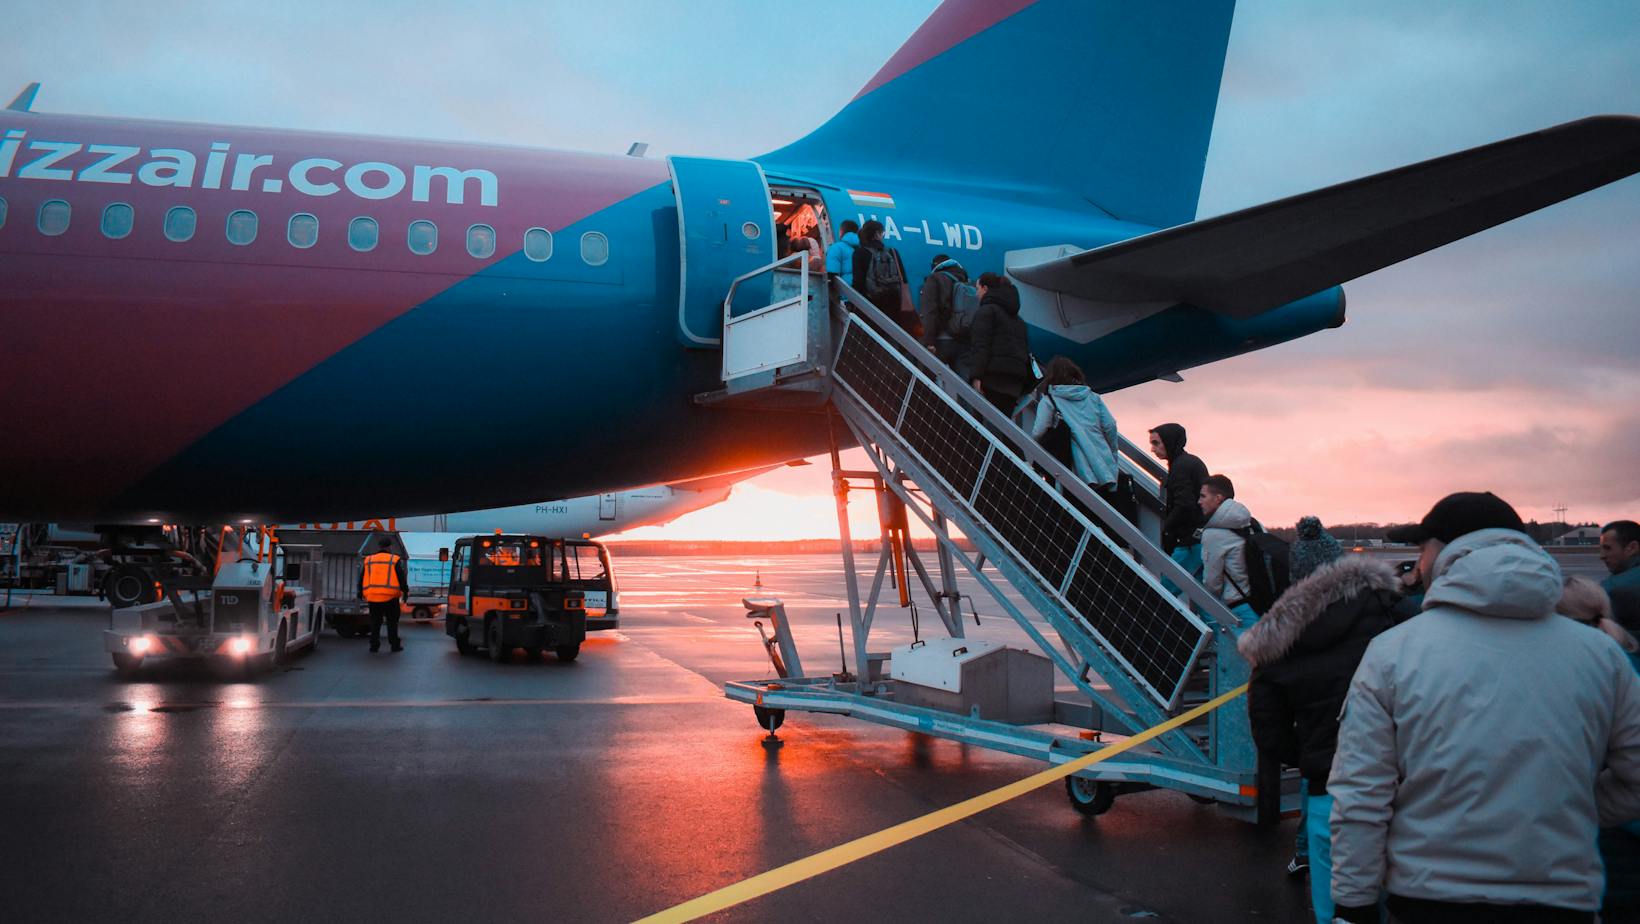 ExpertFlyer and SeatGuru Partner to Offer Travelers Better On-flight Seat Options